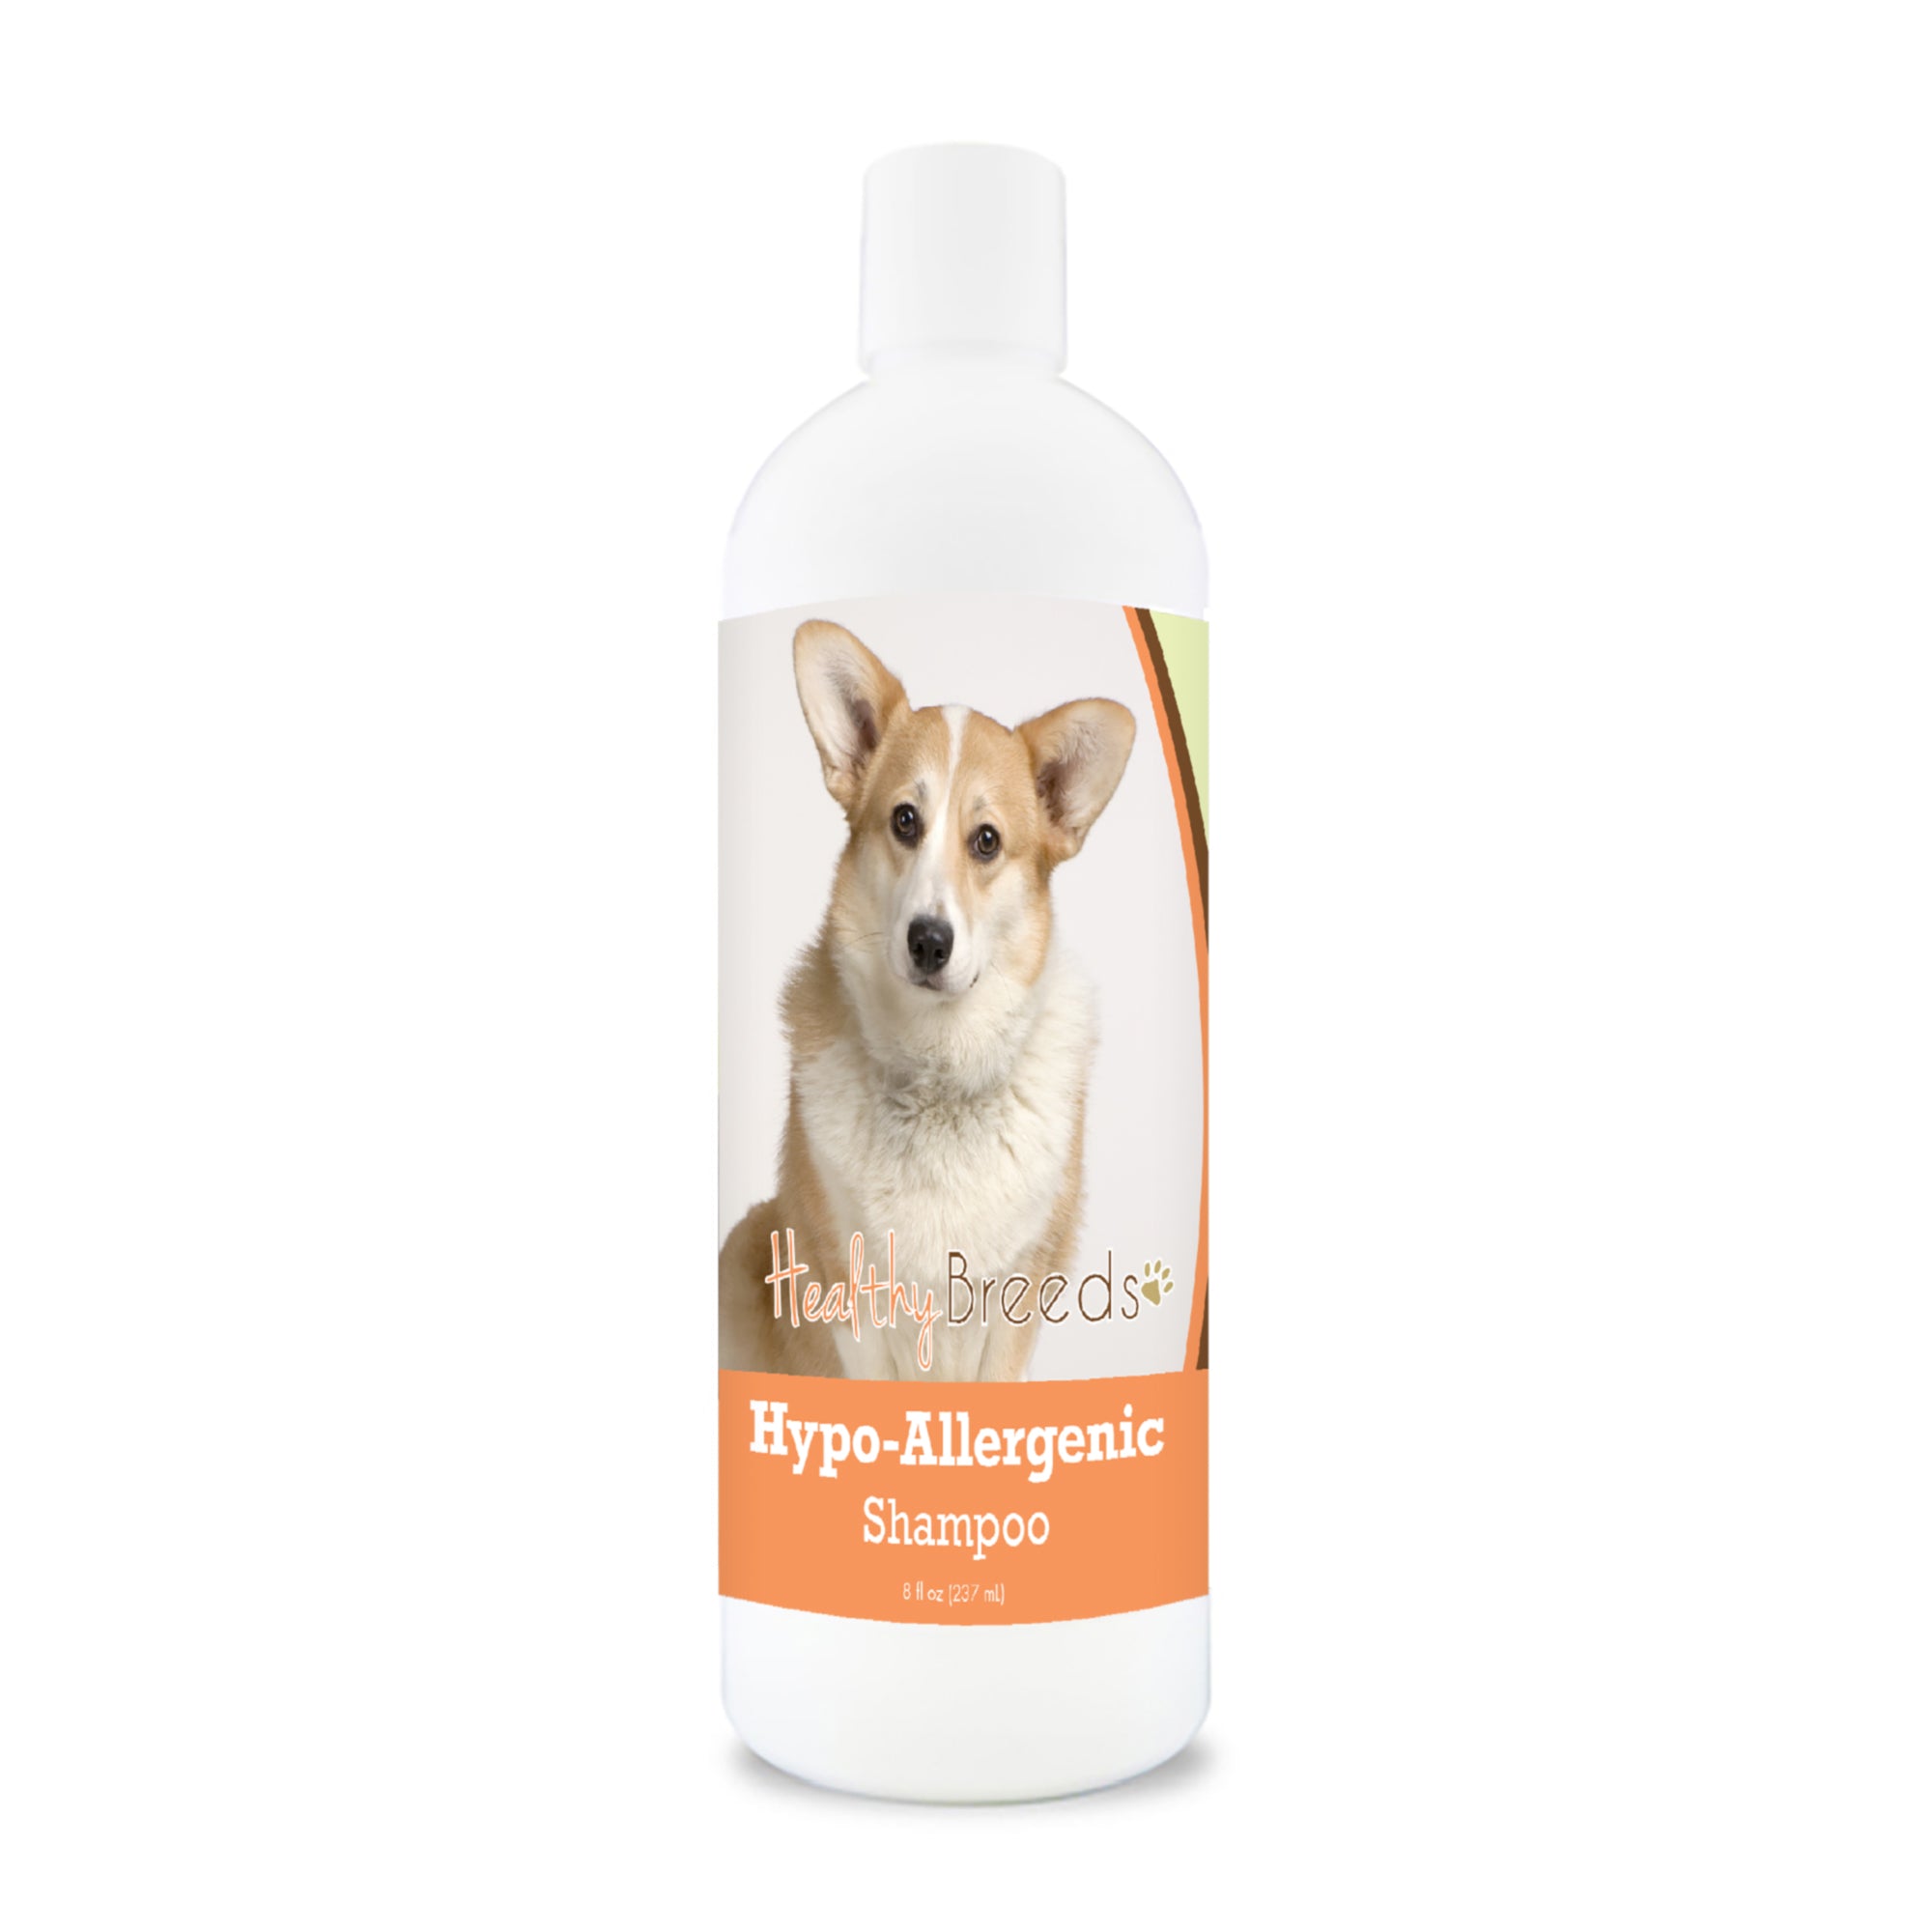 Cardigan Welsh Corgi Hypo-Allergenic Shampoo 8 oz